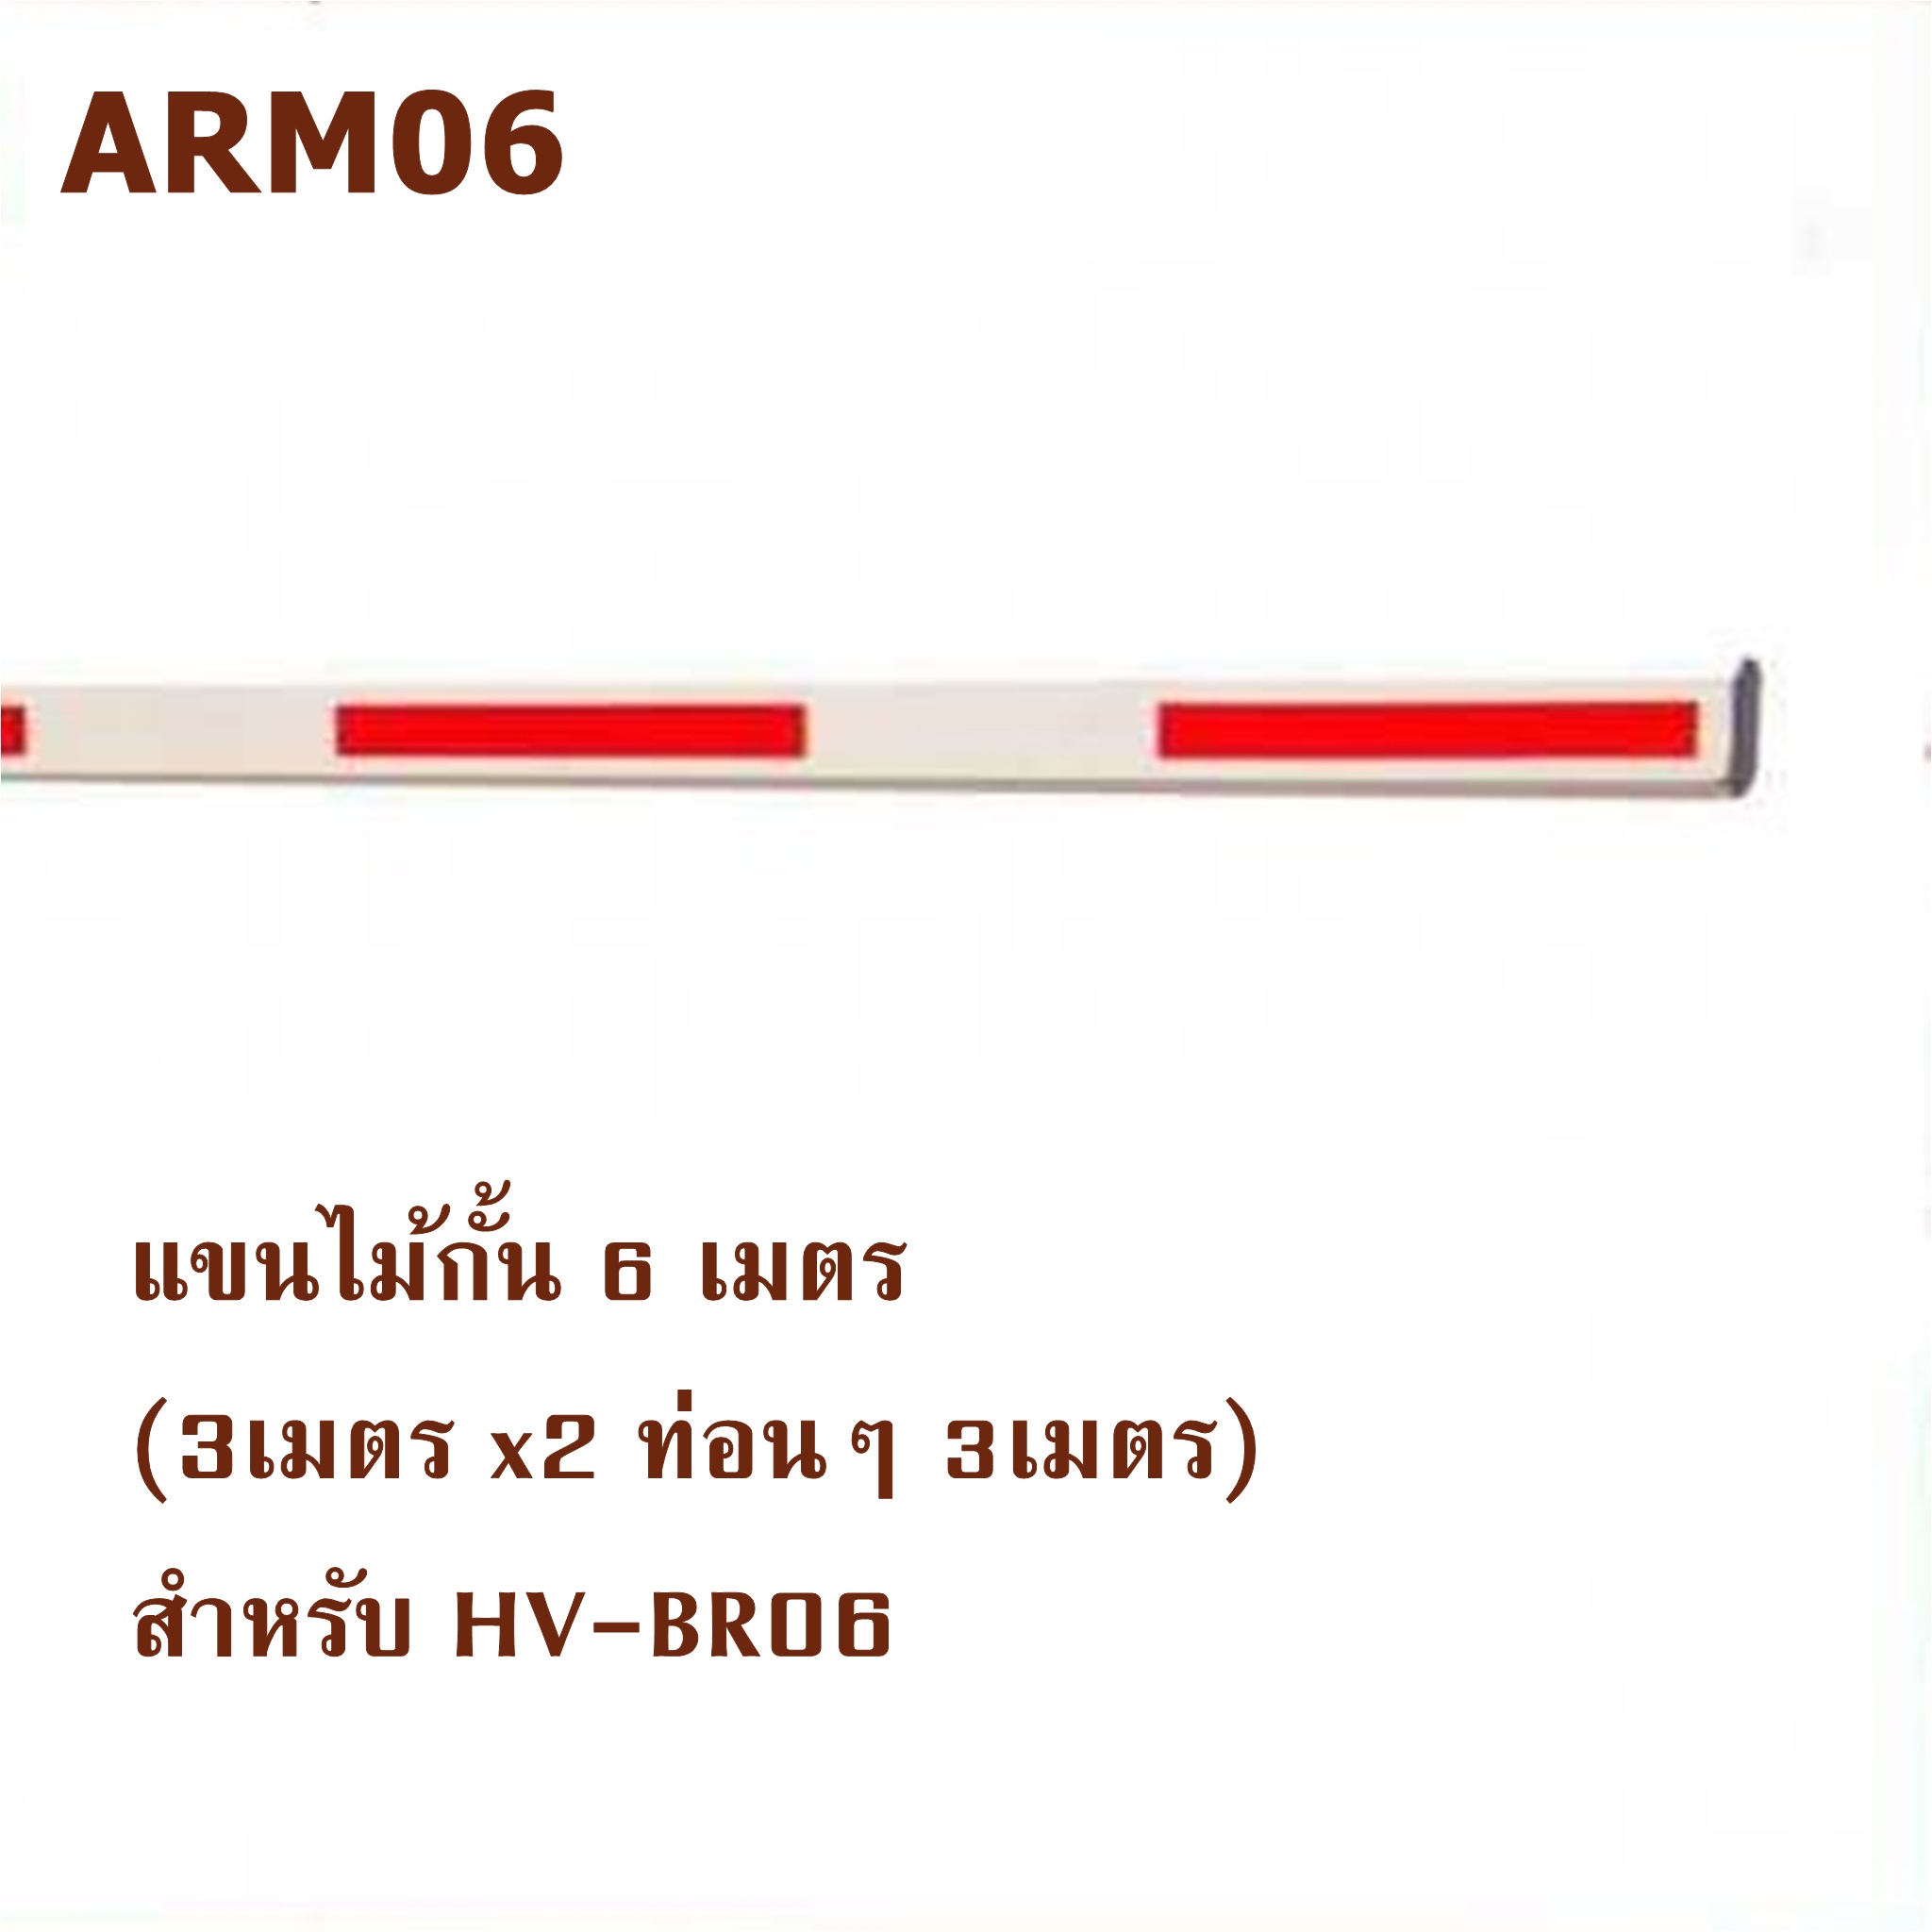 ARM06 แขนไม้กั้น 6 เมตร